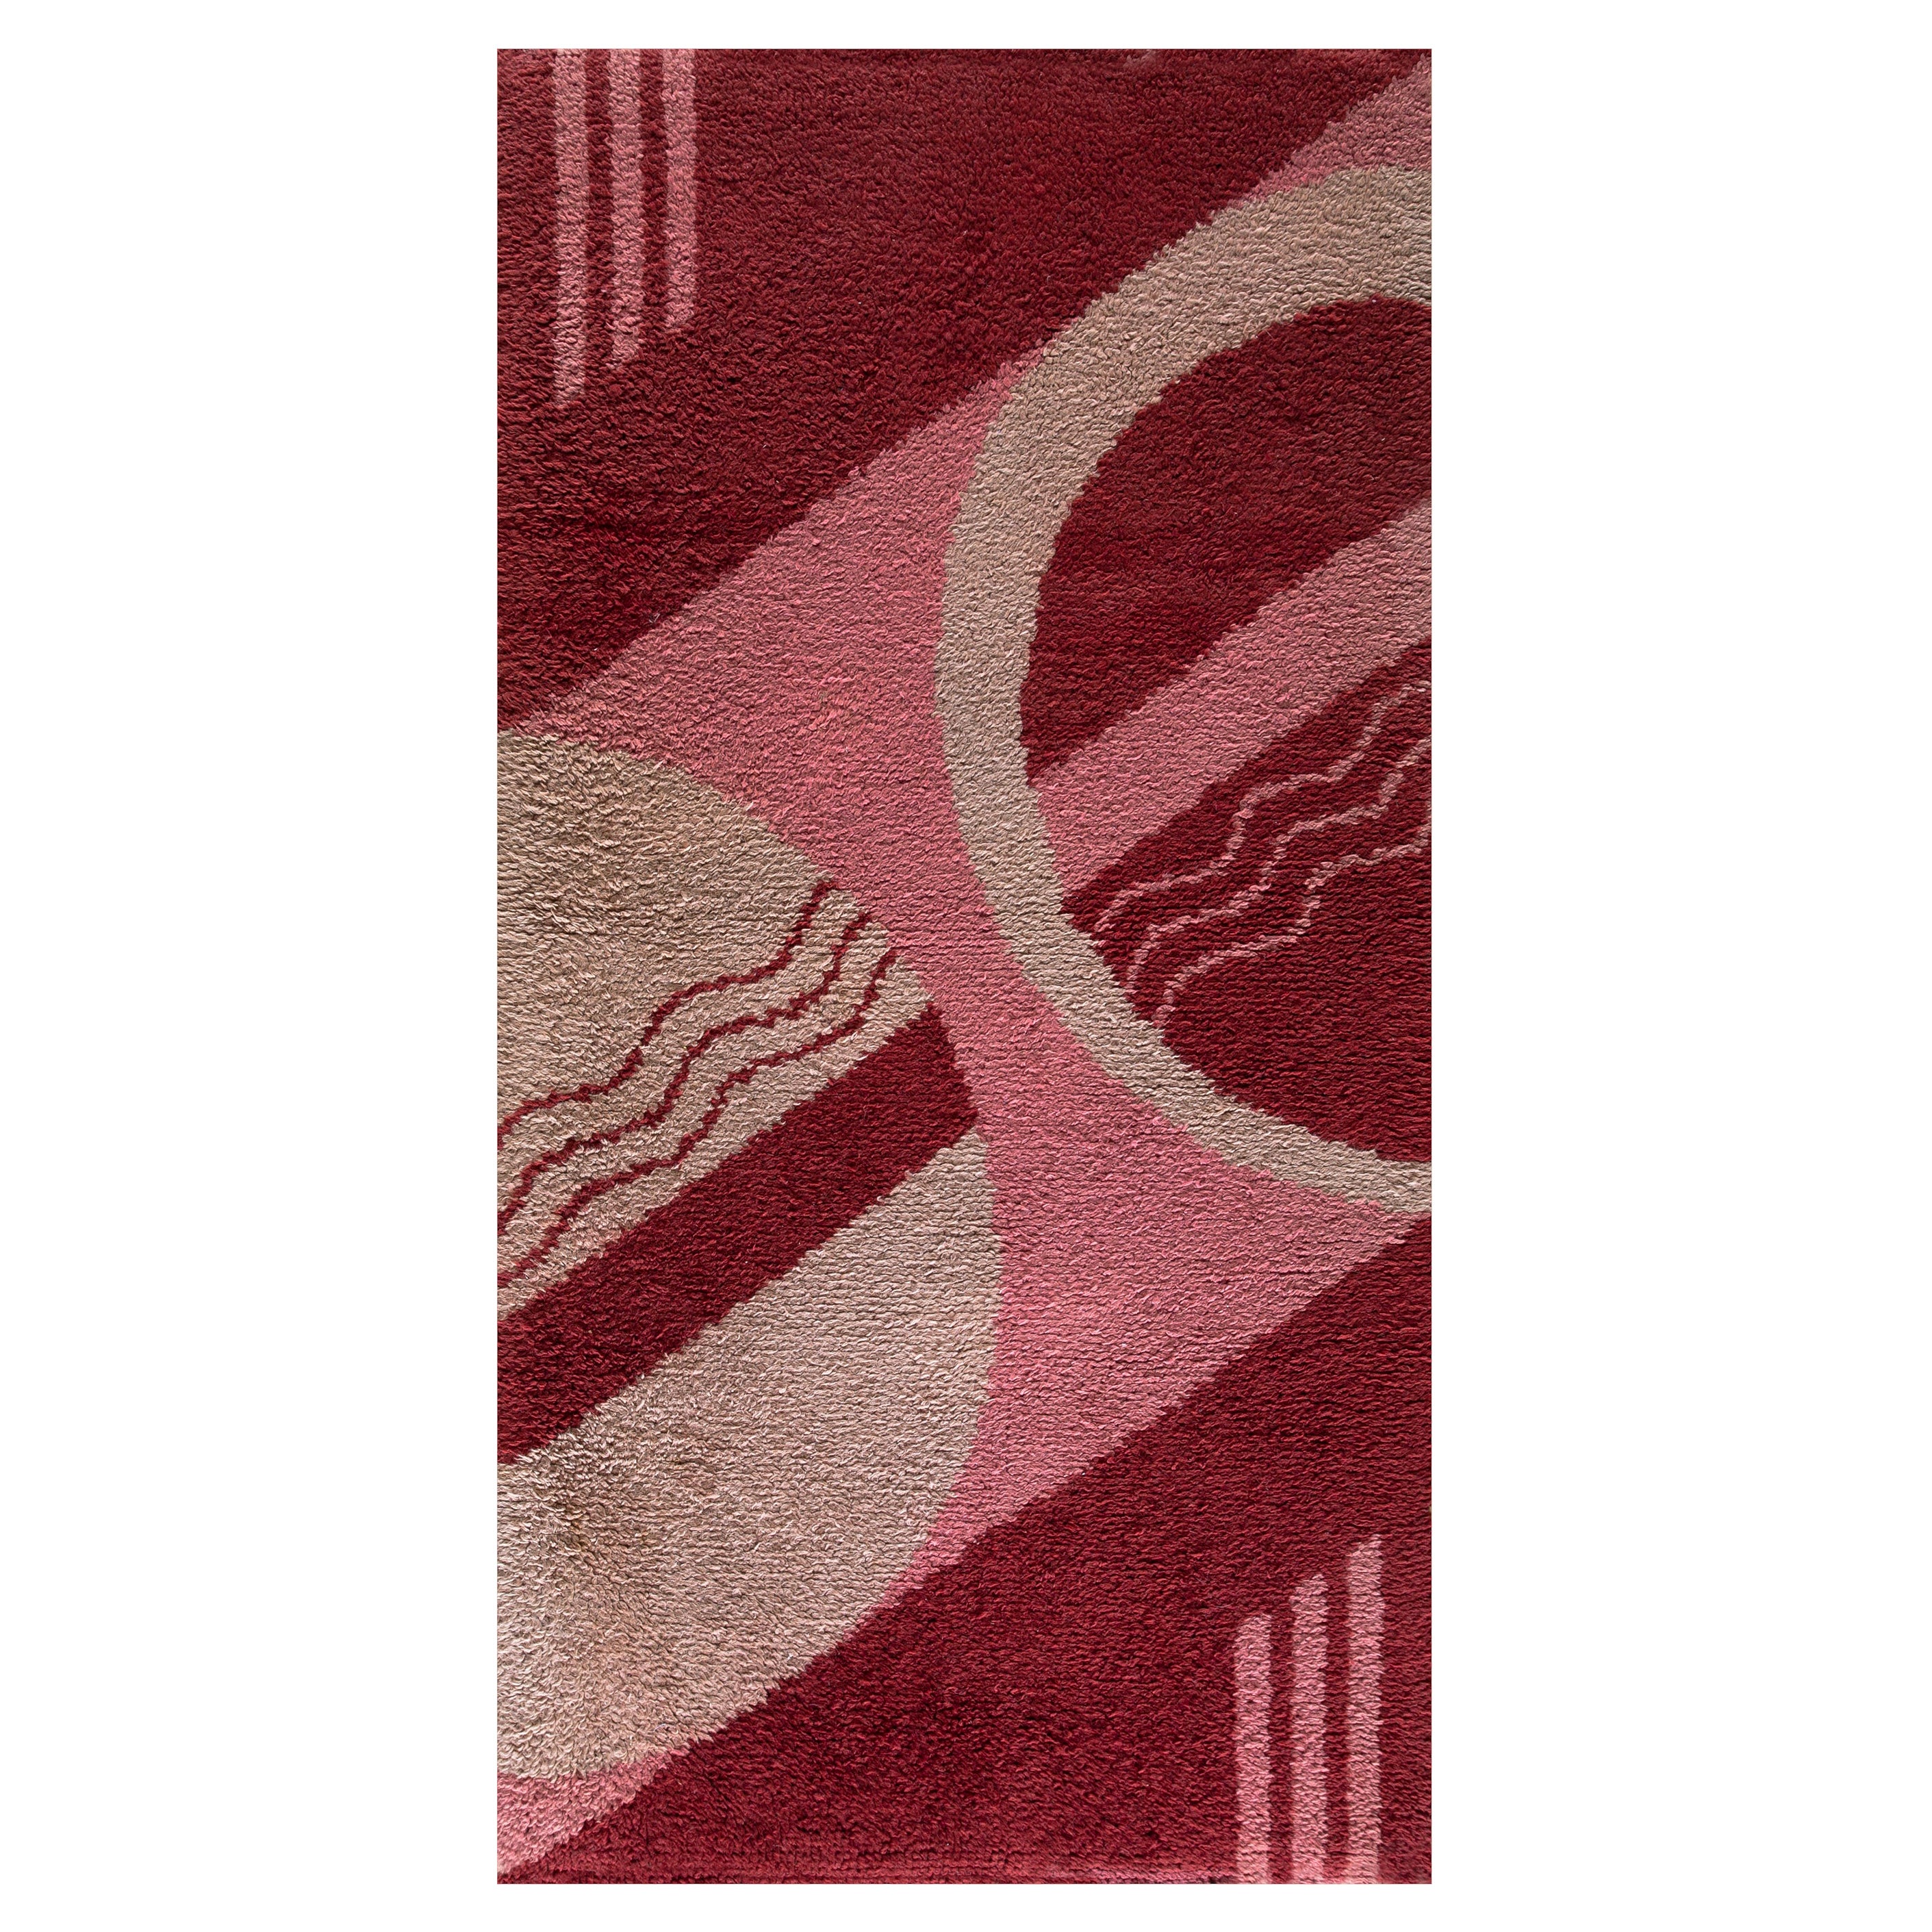 1930s English Art Deco Carpet ( 3' x 5'10" - 92 x 178 )